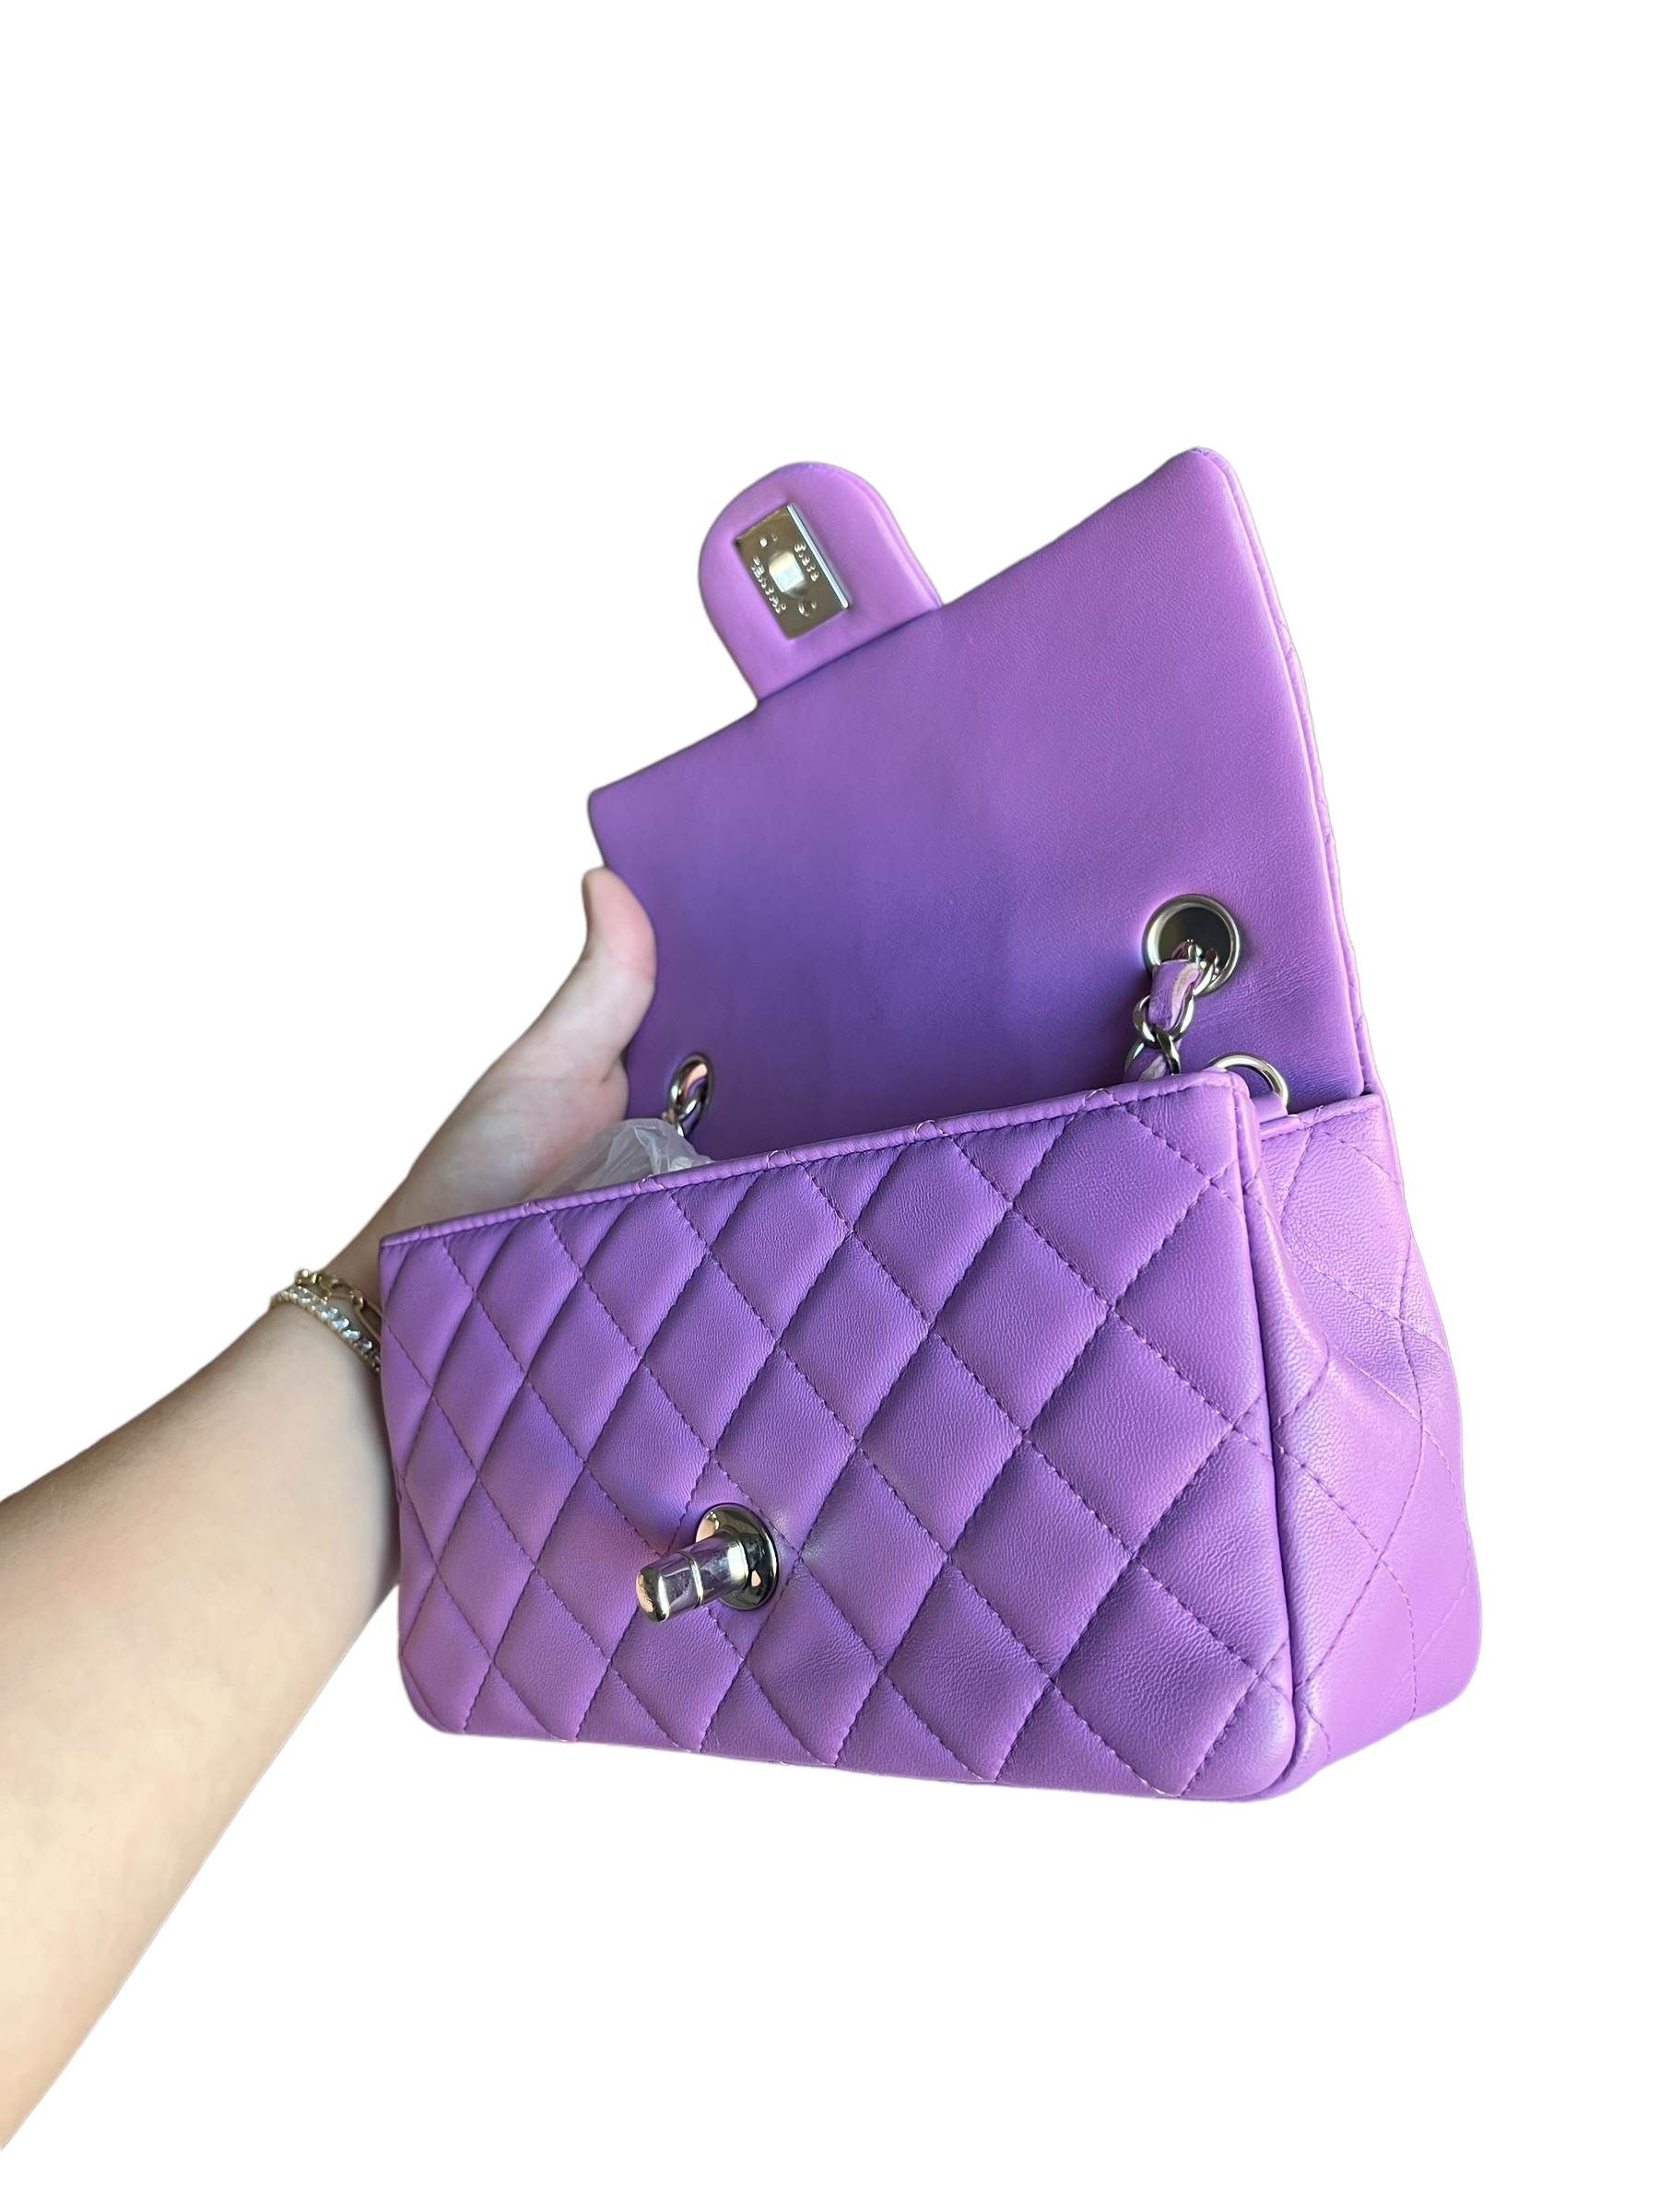 Stunning CHANEL 22P Mini Pink Rectangular Flap Bag with Top Handle